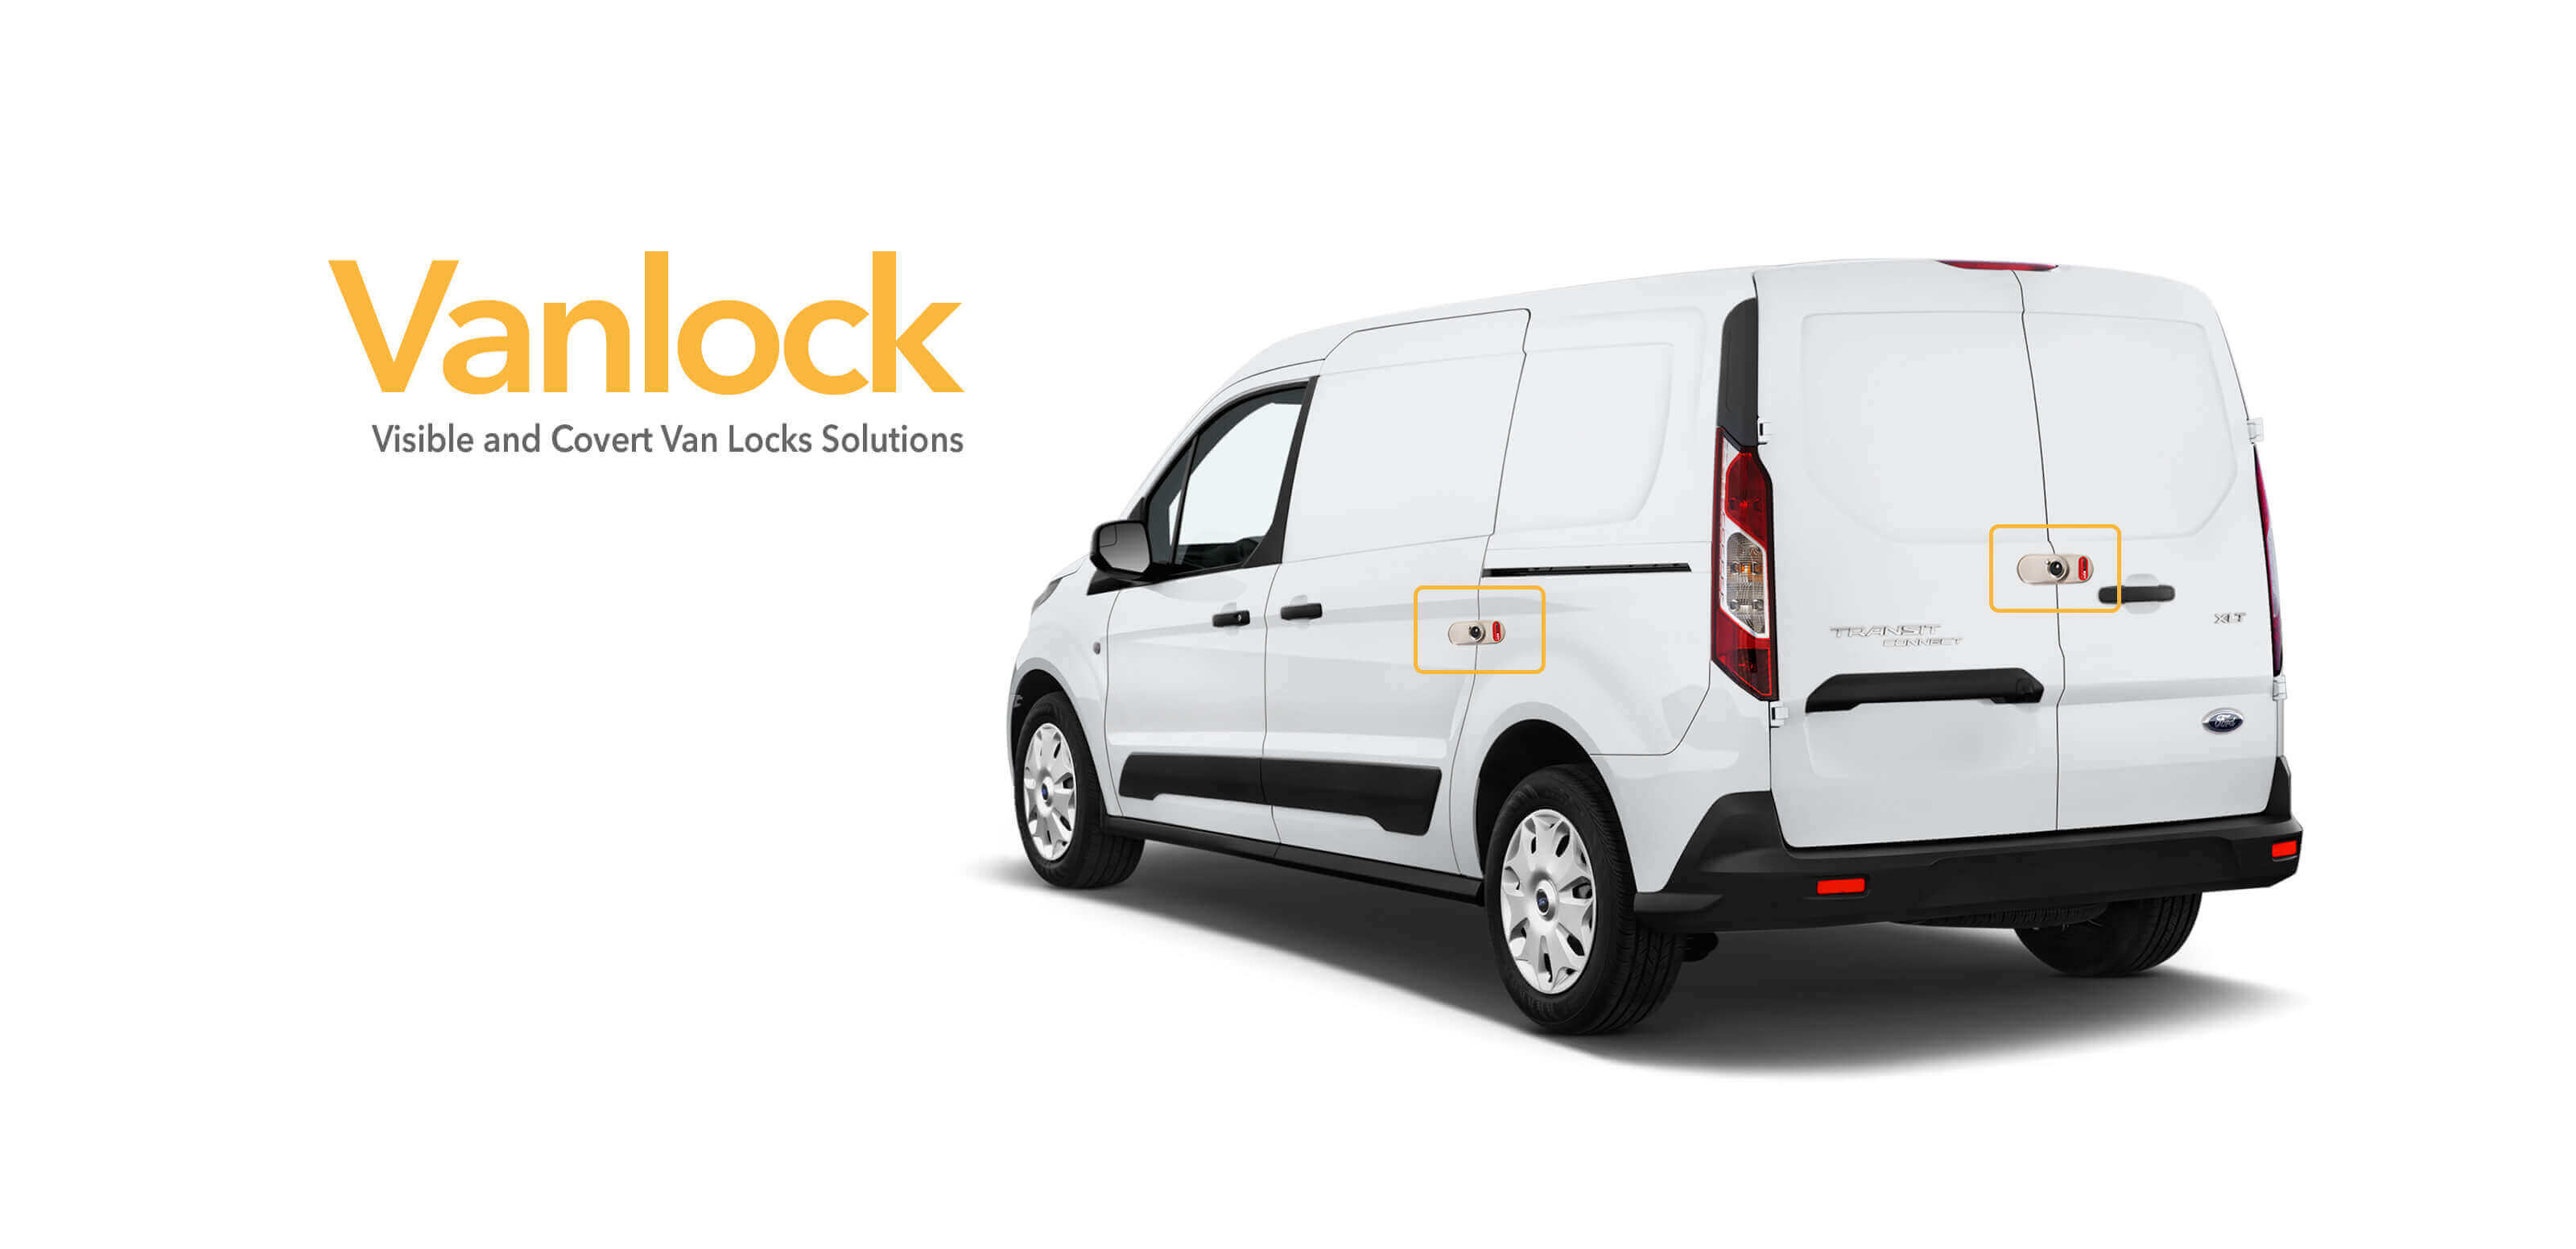 Vanlock Solutions providing expert van locks for vehicle theft in Dublin